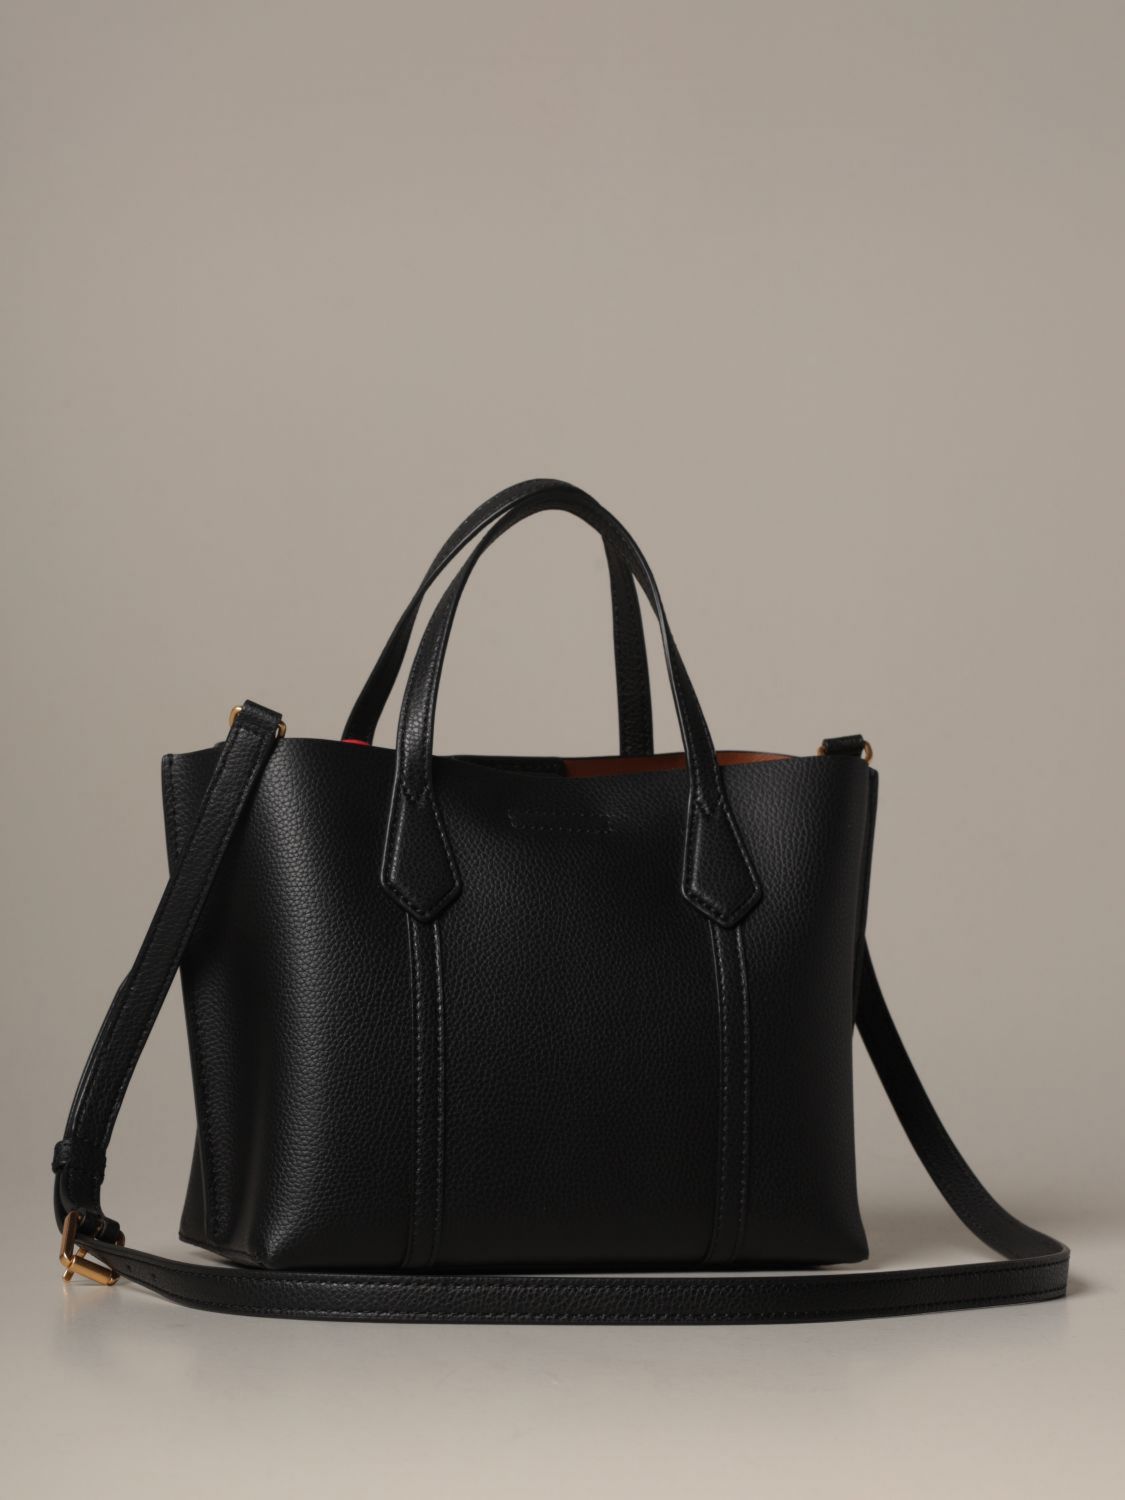 Tory Burch Blake Black Medium Pebbled Leather Shopping Tote Bag Handba –  AUMI 4